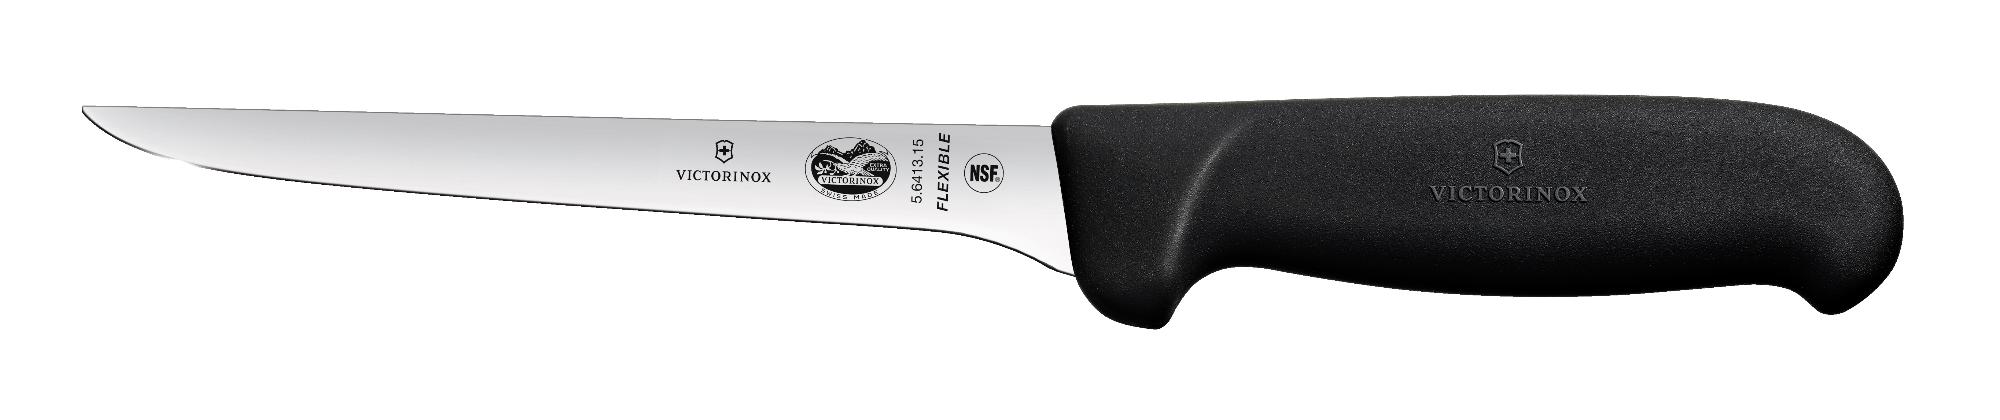 Fibrox deboning knife, narrow blade, flexible, 15 cm